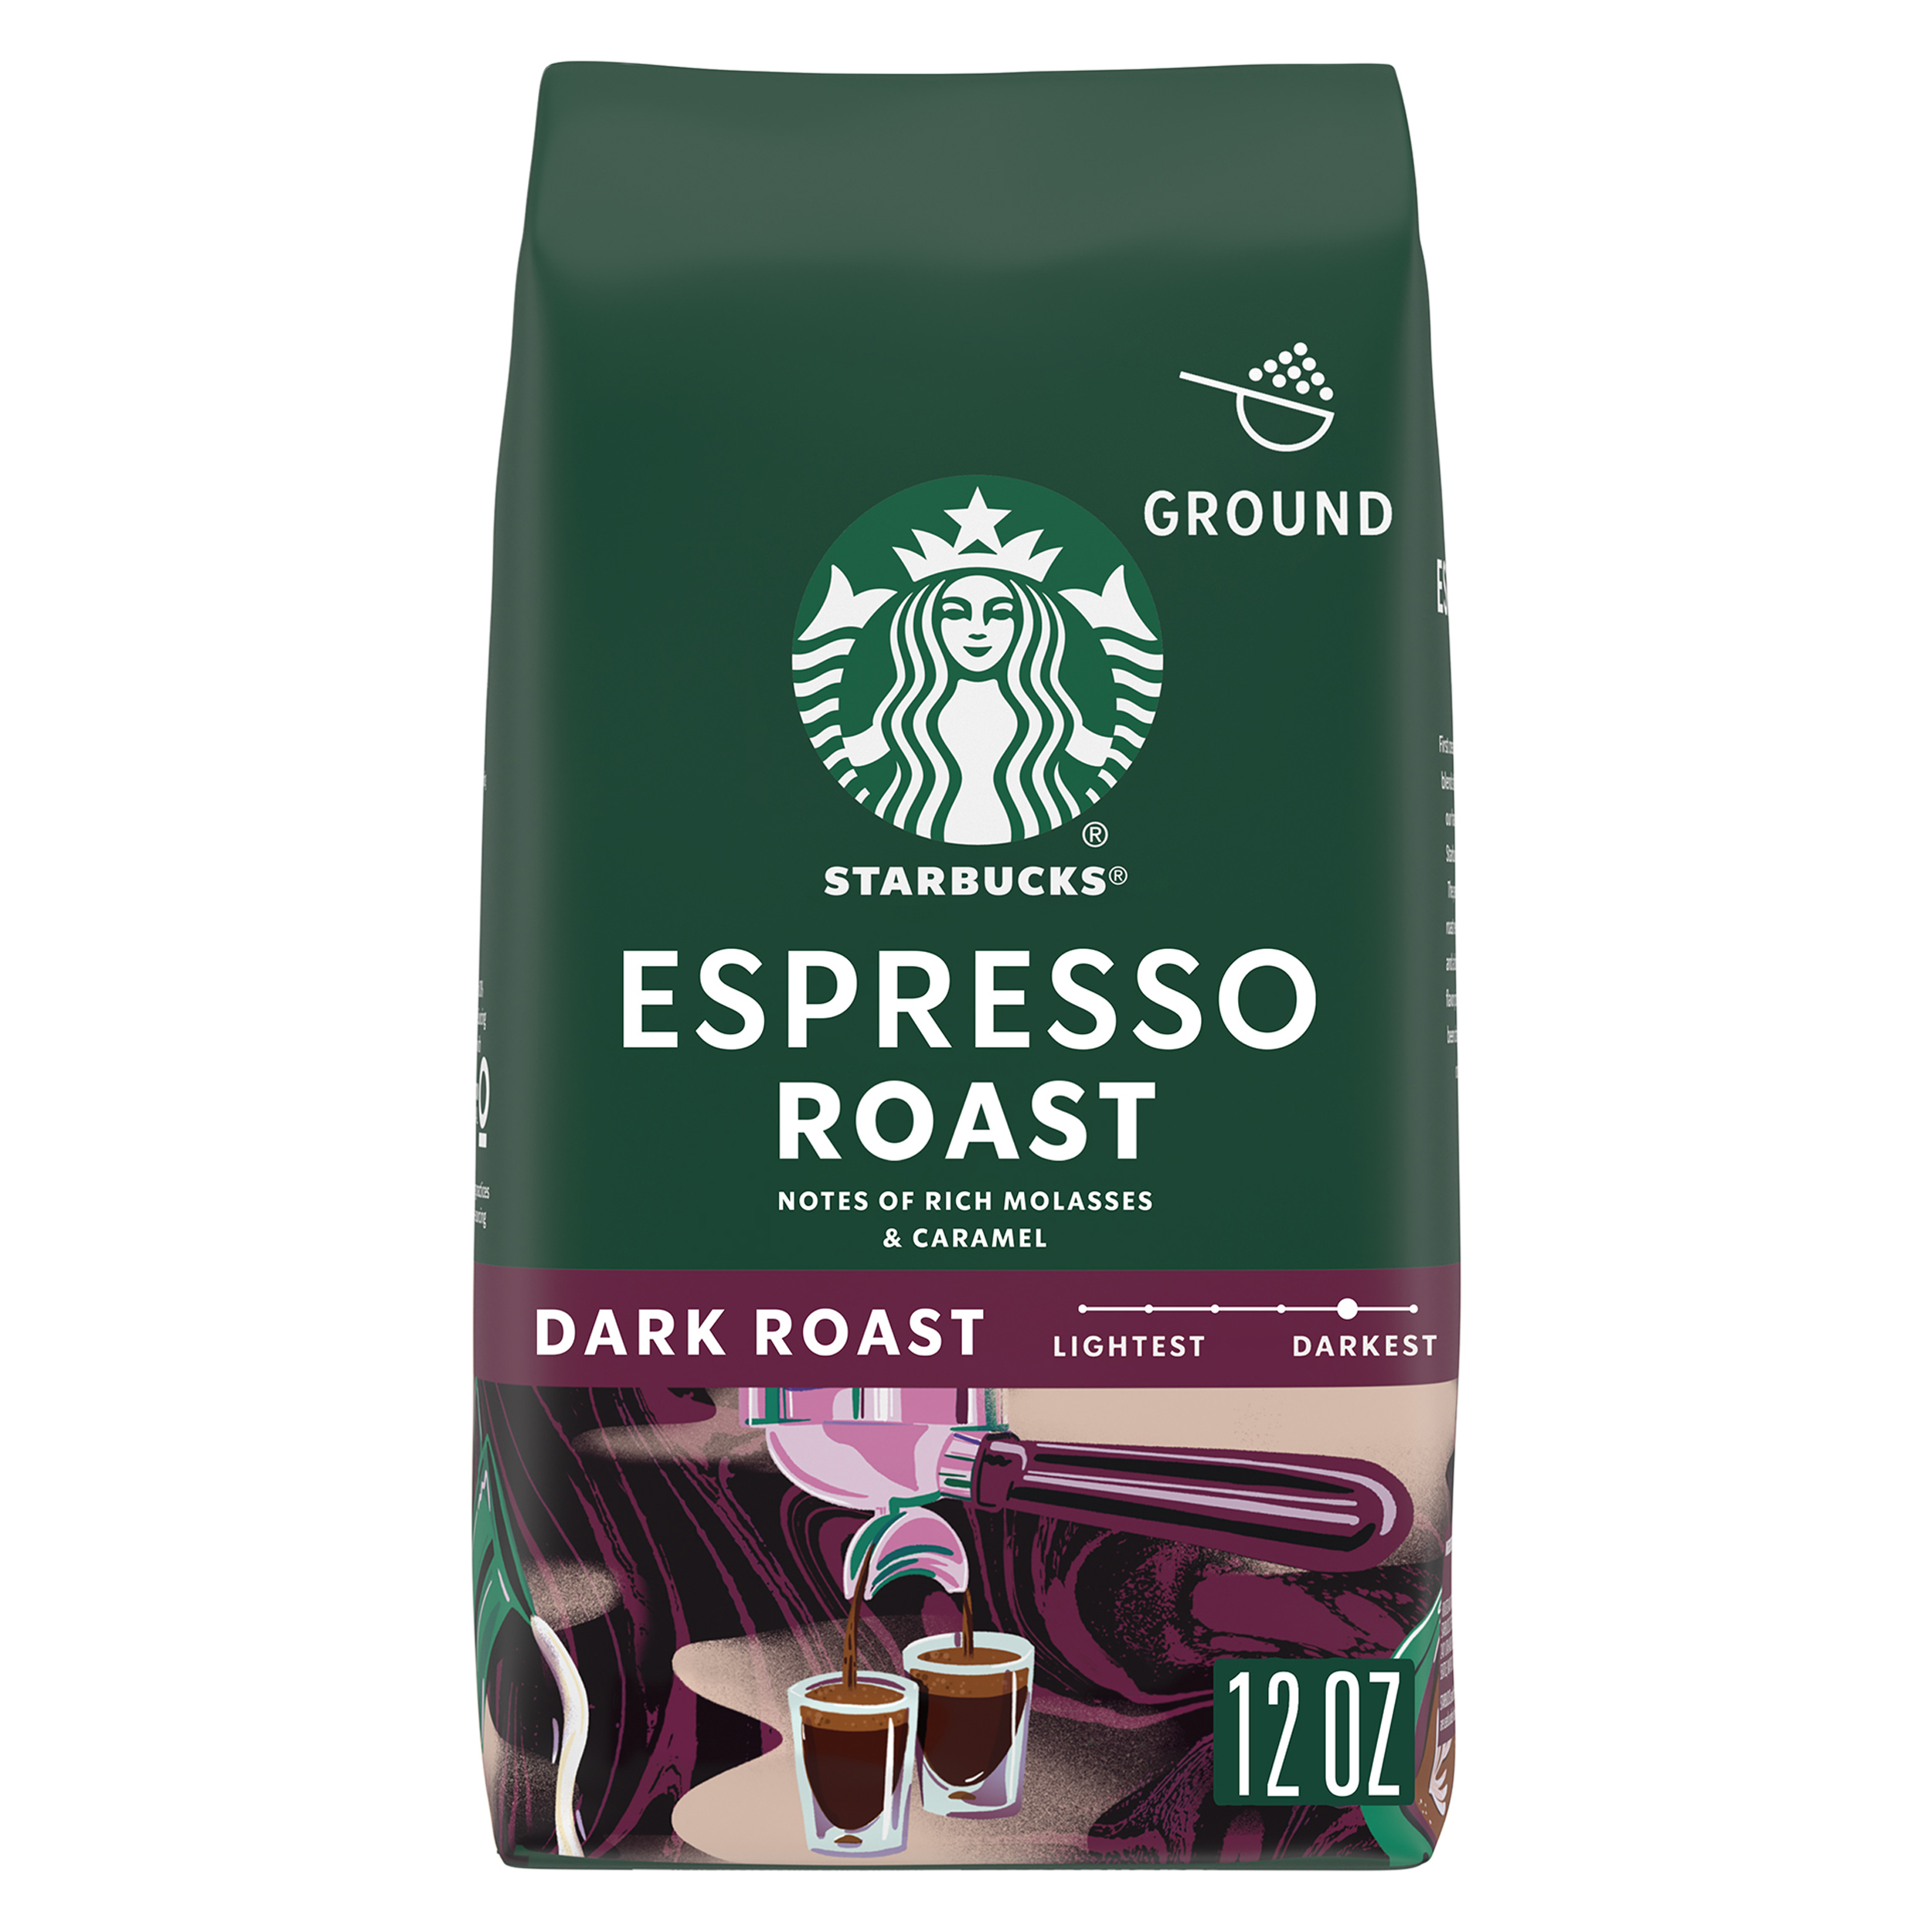 Starbucks Espresso Roast, Dark Roast Ground Coffee, 100% Arabica, 12 oz - image 1 of 8